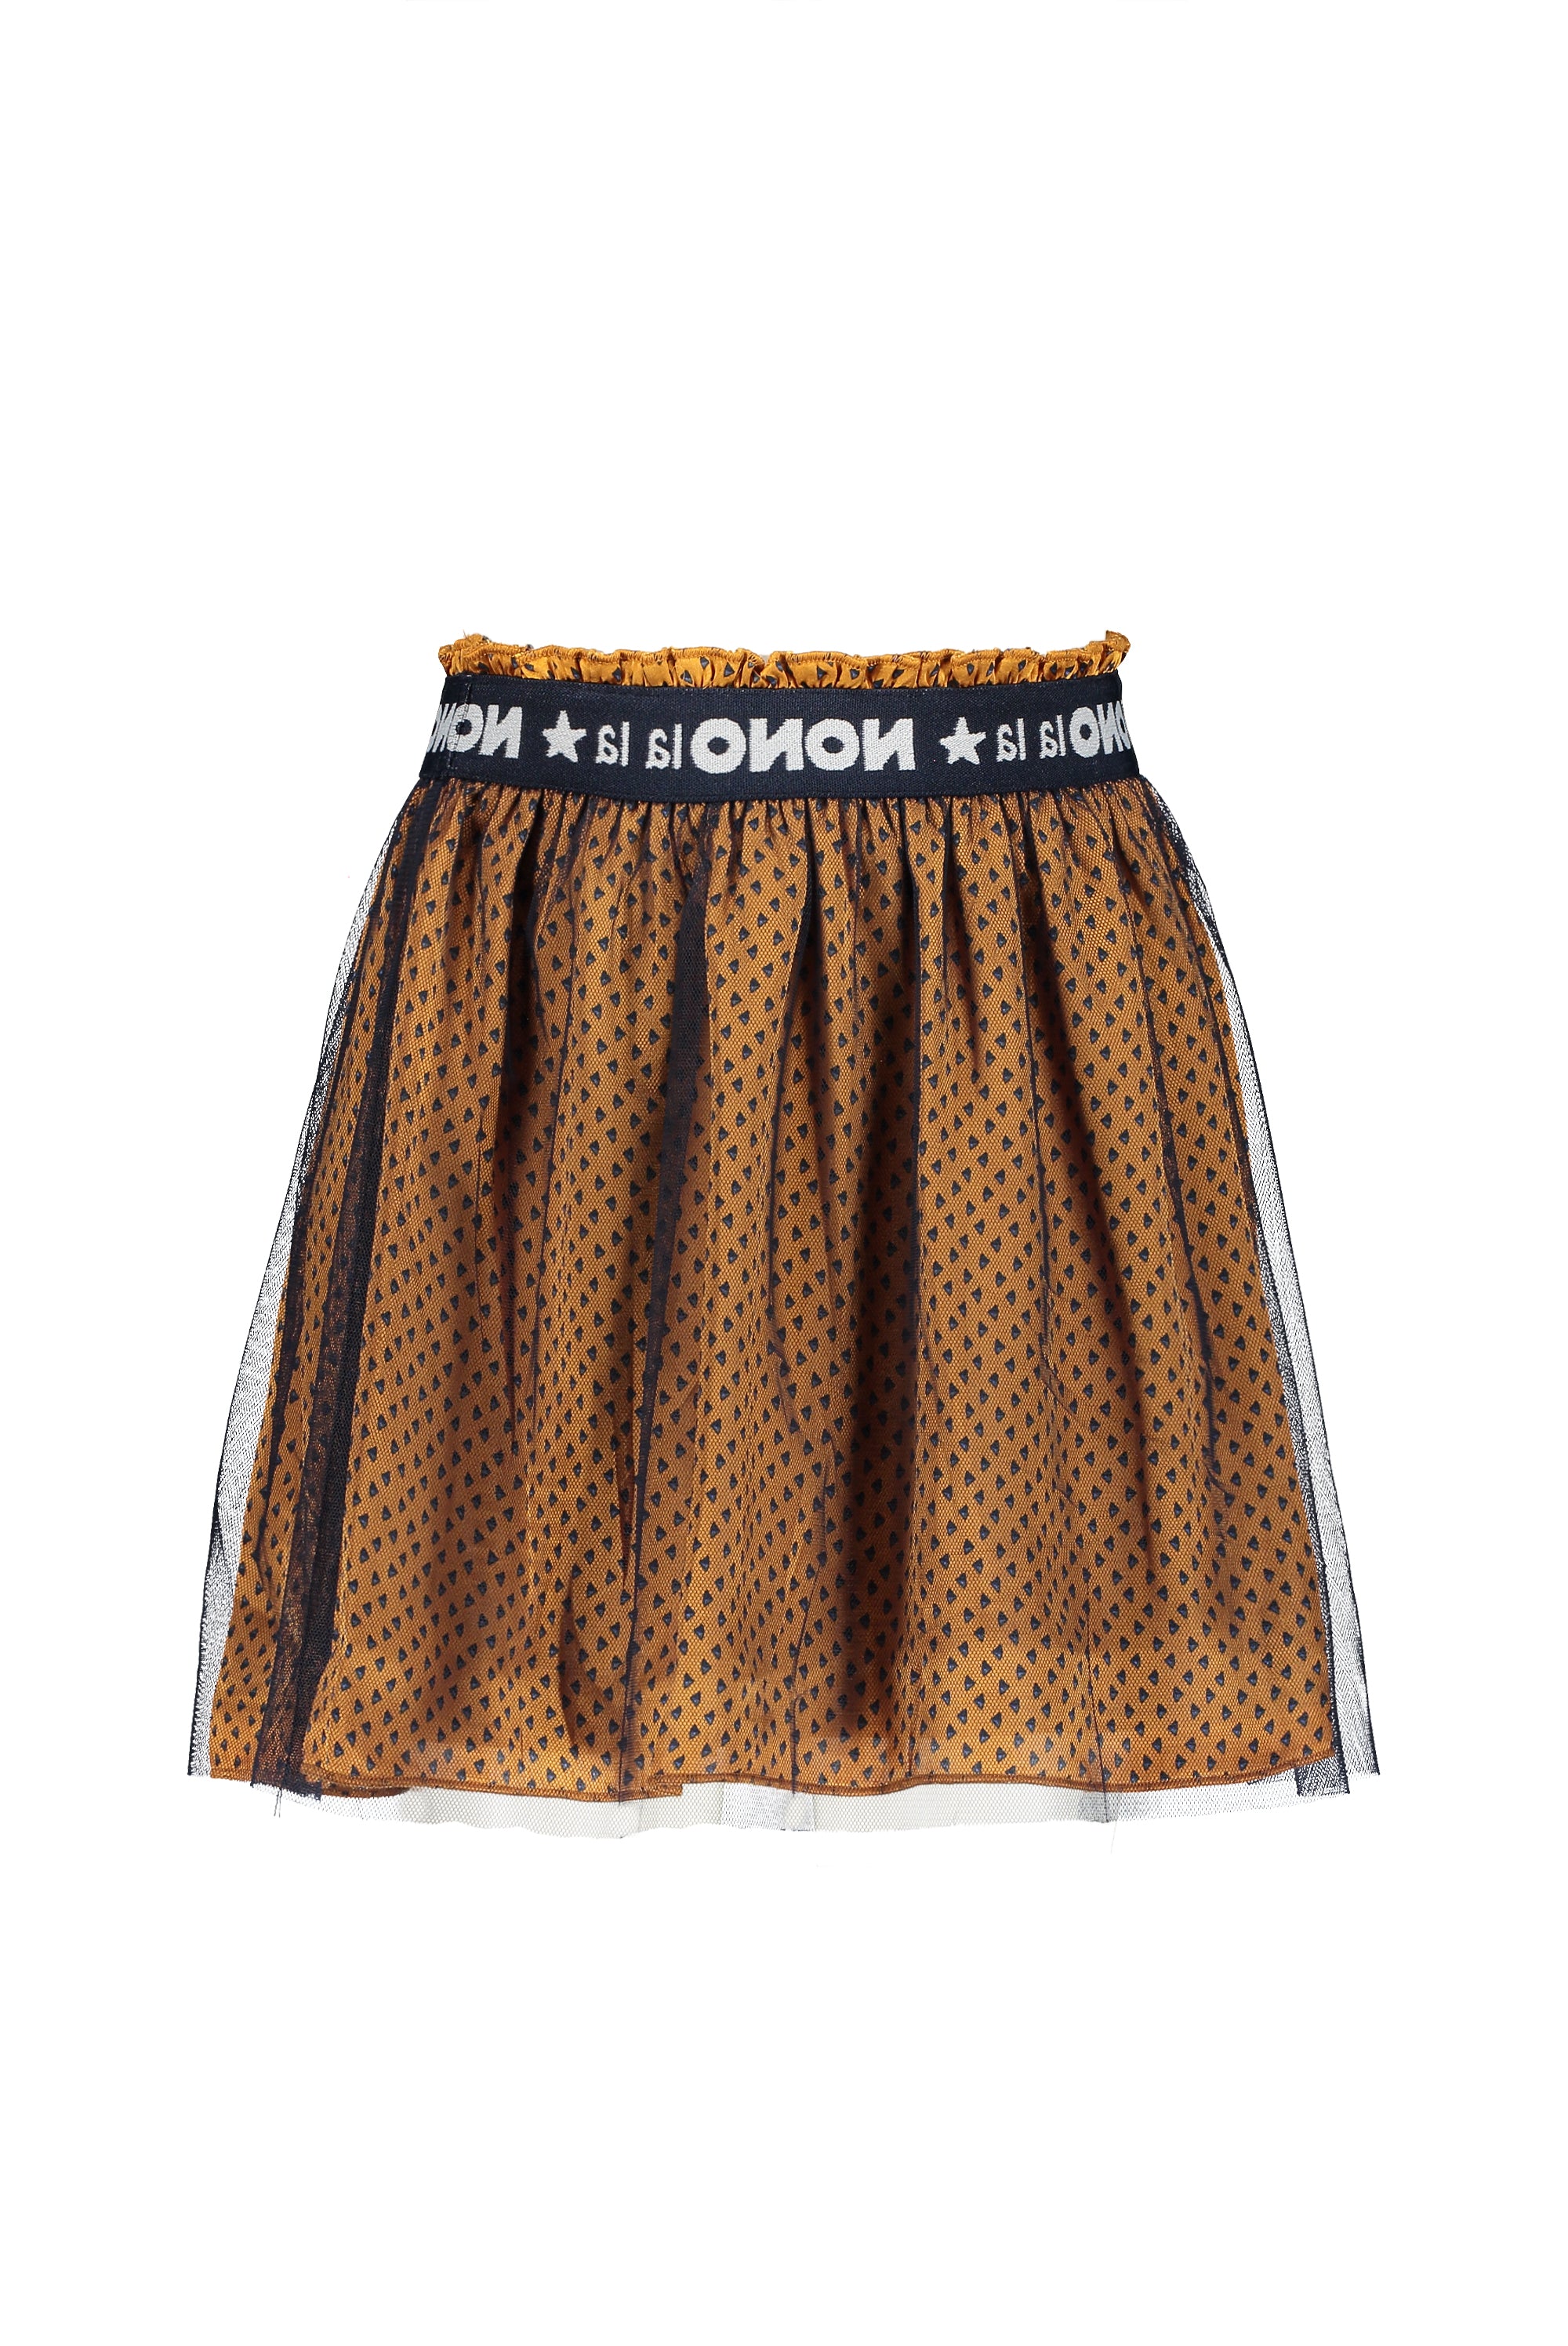 NoNo Nola short triangle aop skirt with mesh layer